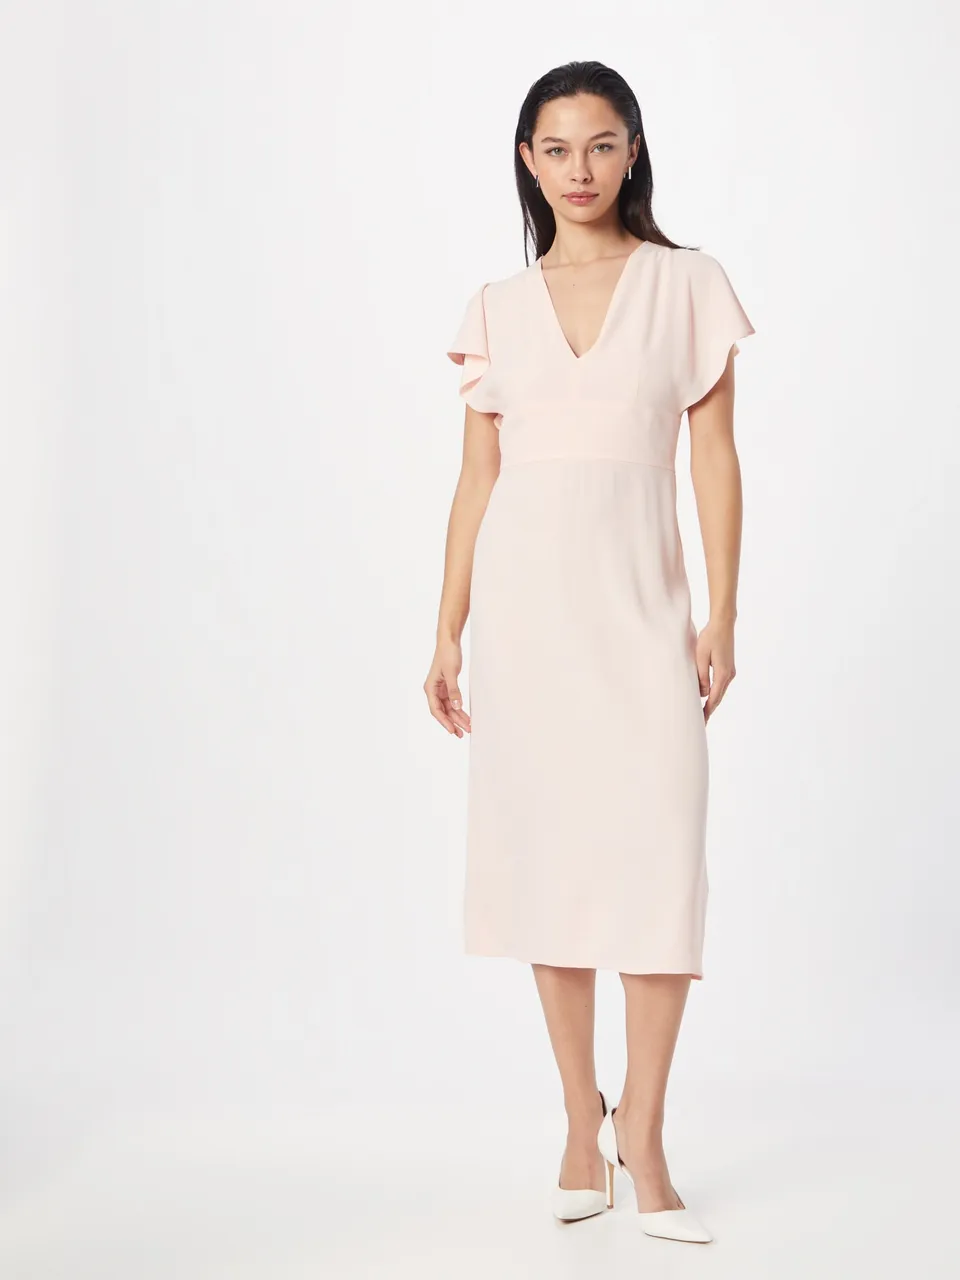 Hugo Boss BOSS Kleid Damen Acetat V-Ausschnitt rosa 610216-0001-00340 -  Preise vergleichen